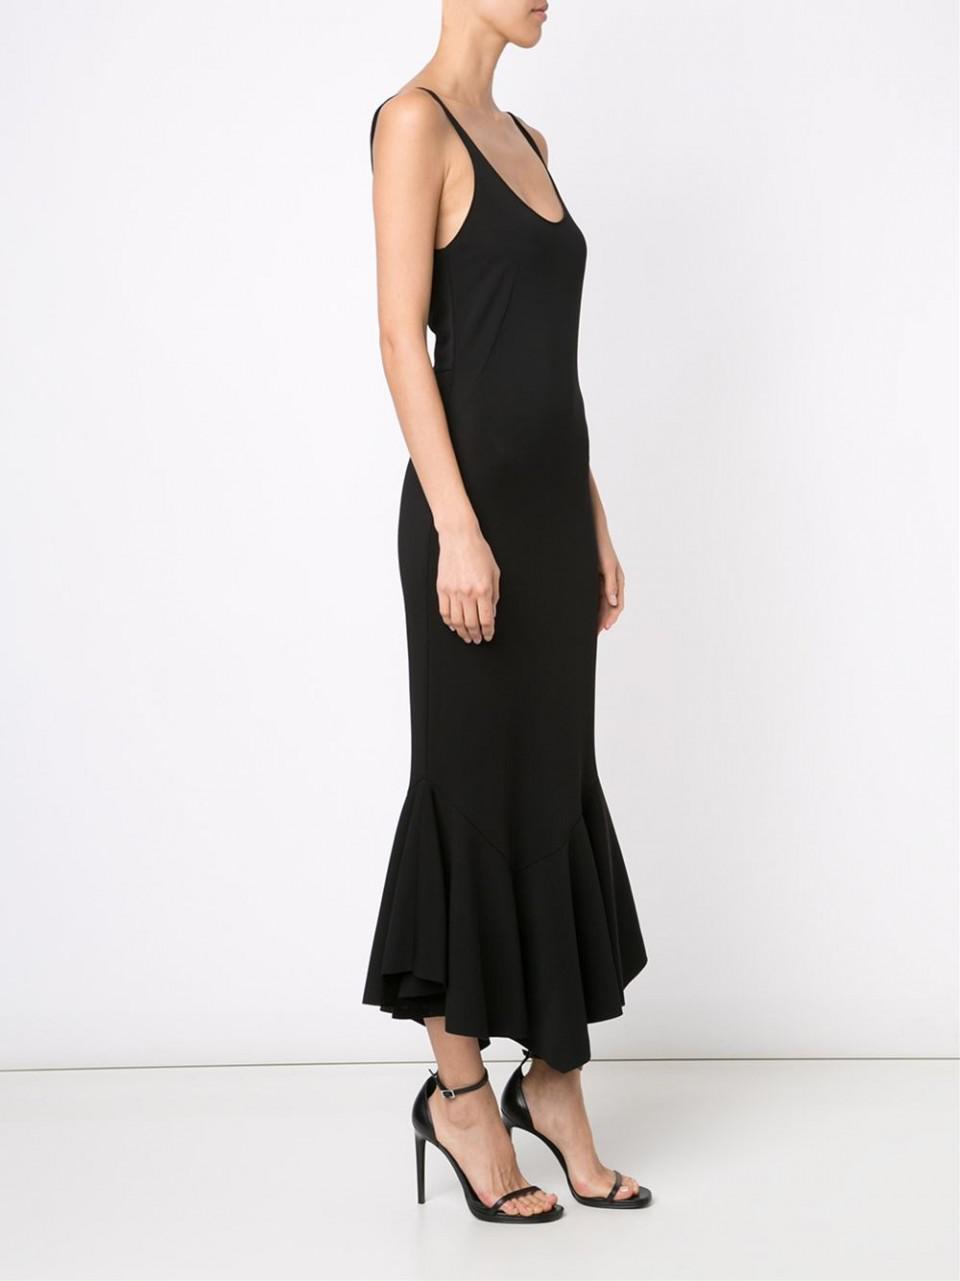 Givenchy Black Zipper Dress : Lyst - Givenchy Studded Lace-inset Mini ...